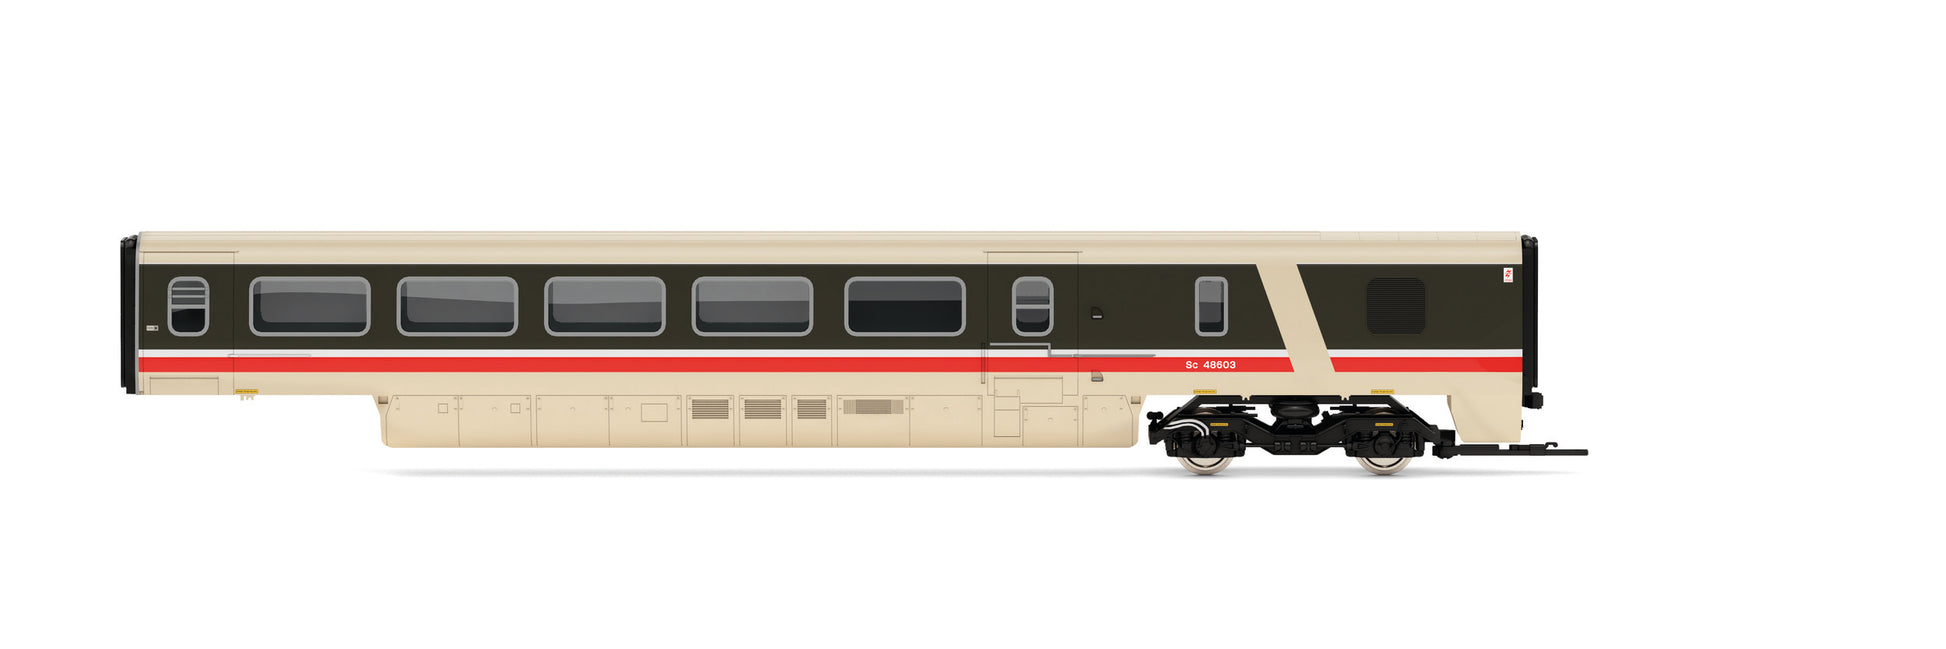 R30229 BR, Class 370 Advanced Passenger Train, Sets 370003 and 370004, 7 Car Train Pack - Era 7 - Chester Model Centre